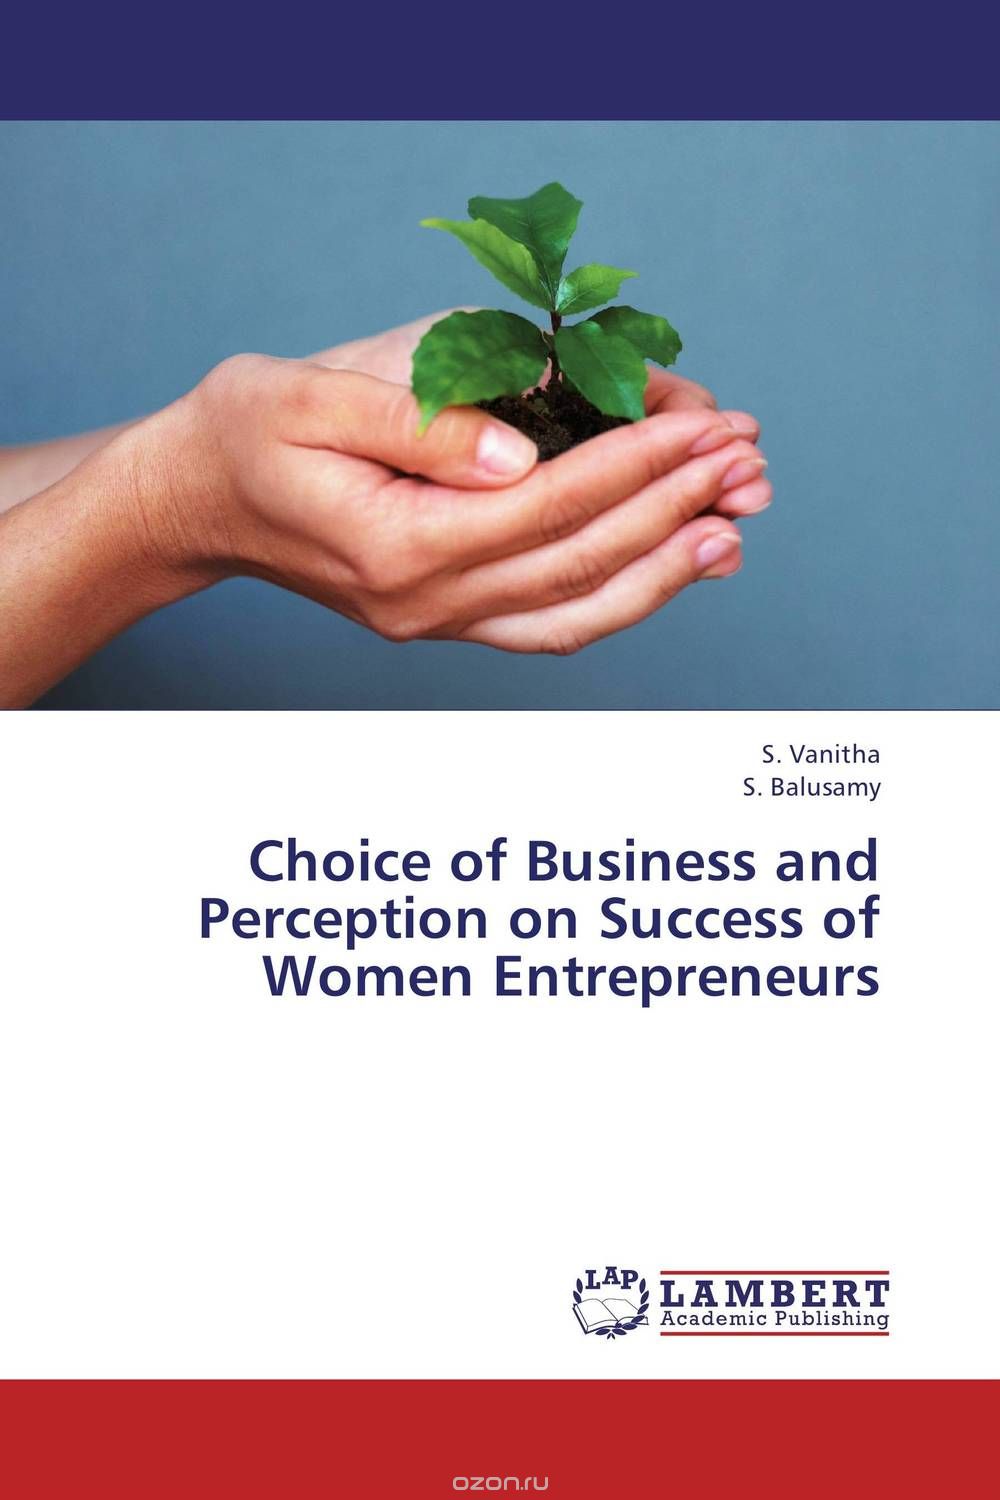 Скачать книгу "Choice of Business and Perception on Success of Women Entrepreneurs"